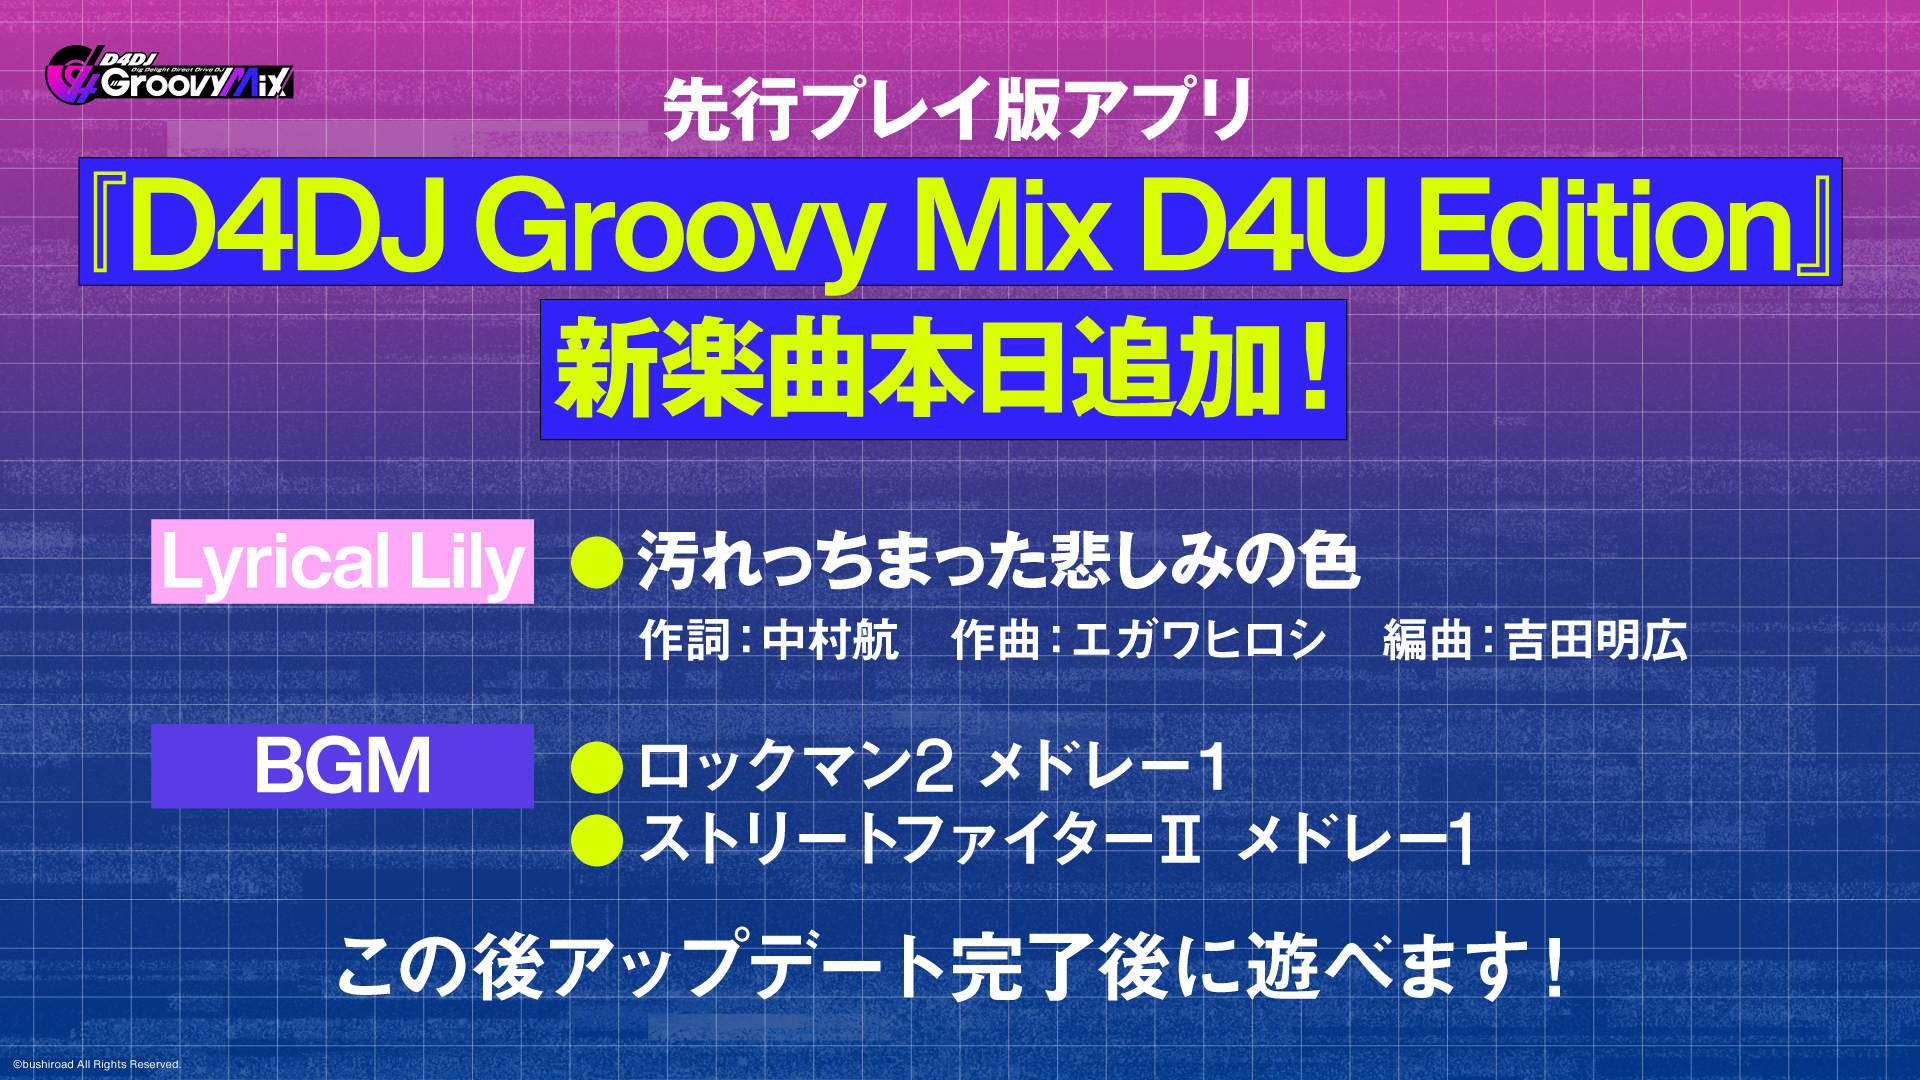 「D4DJ Groovy Mix D4U Edition」新楽曲追加